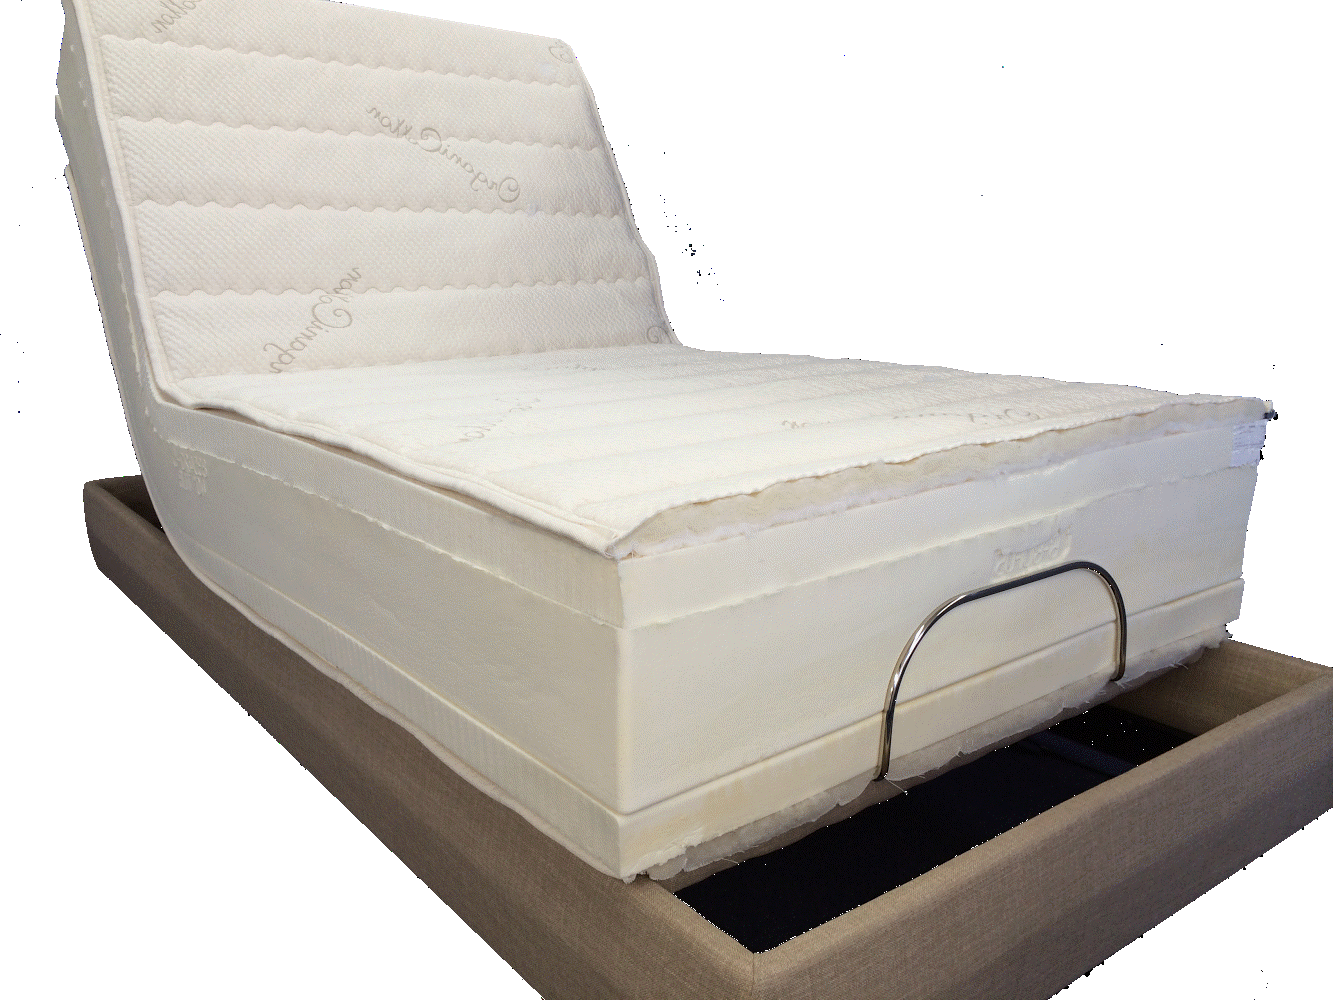 Las Vegas latex mattress are natural organic bed